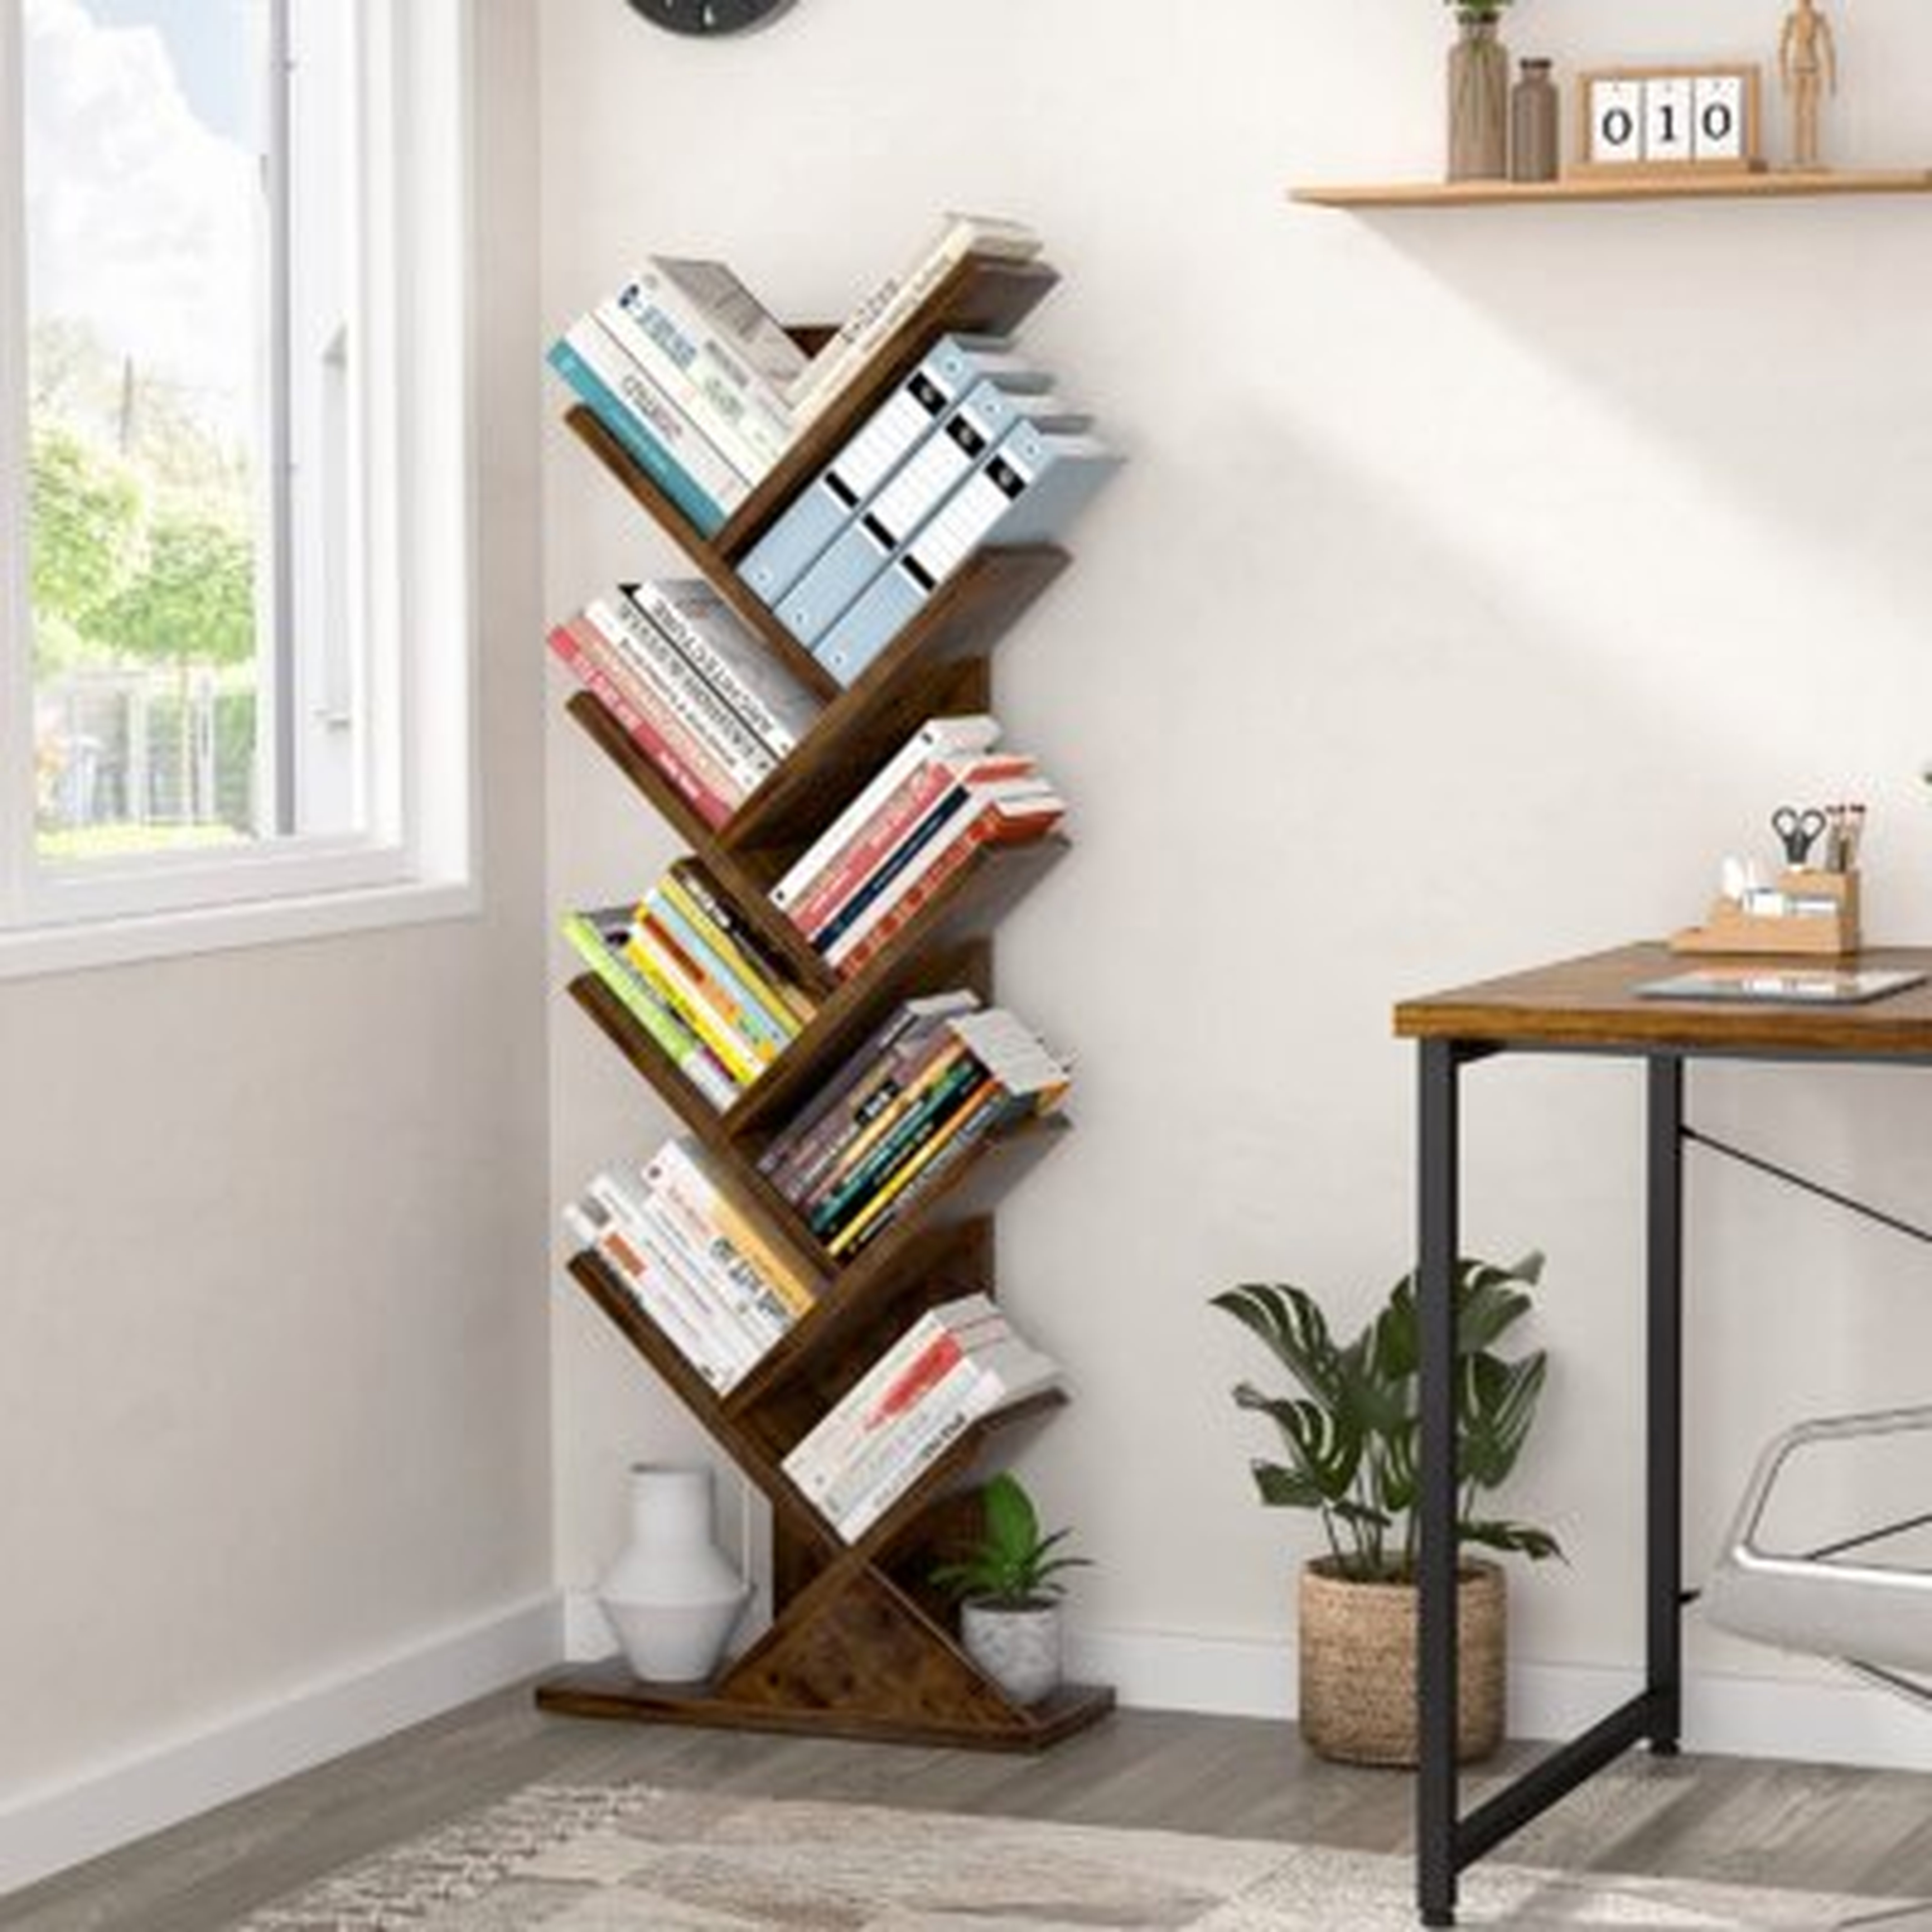 Tree Bookshelf, Shelf Rustic Brown Bookcase, Retro Wood Storage Rack For Cds/Movies/Books, Anti-Fall Utility Organizer Shelves For Living Room, Bedroom, Home Office - Wayfair